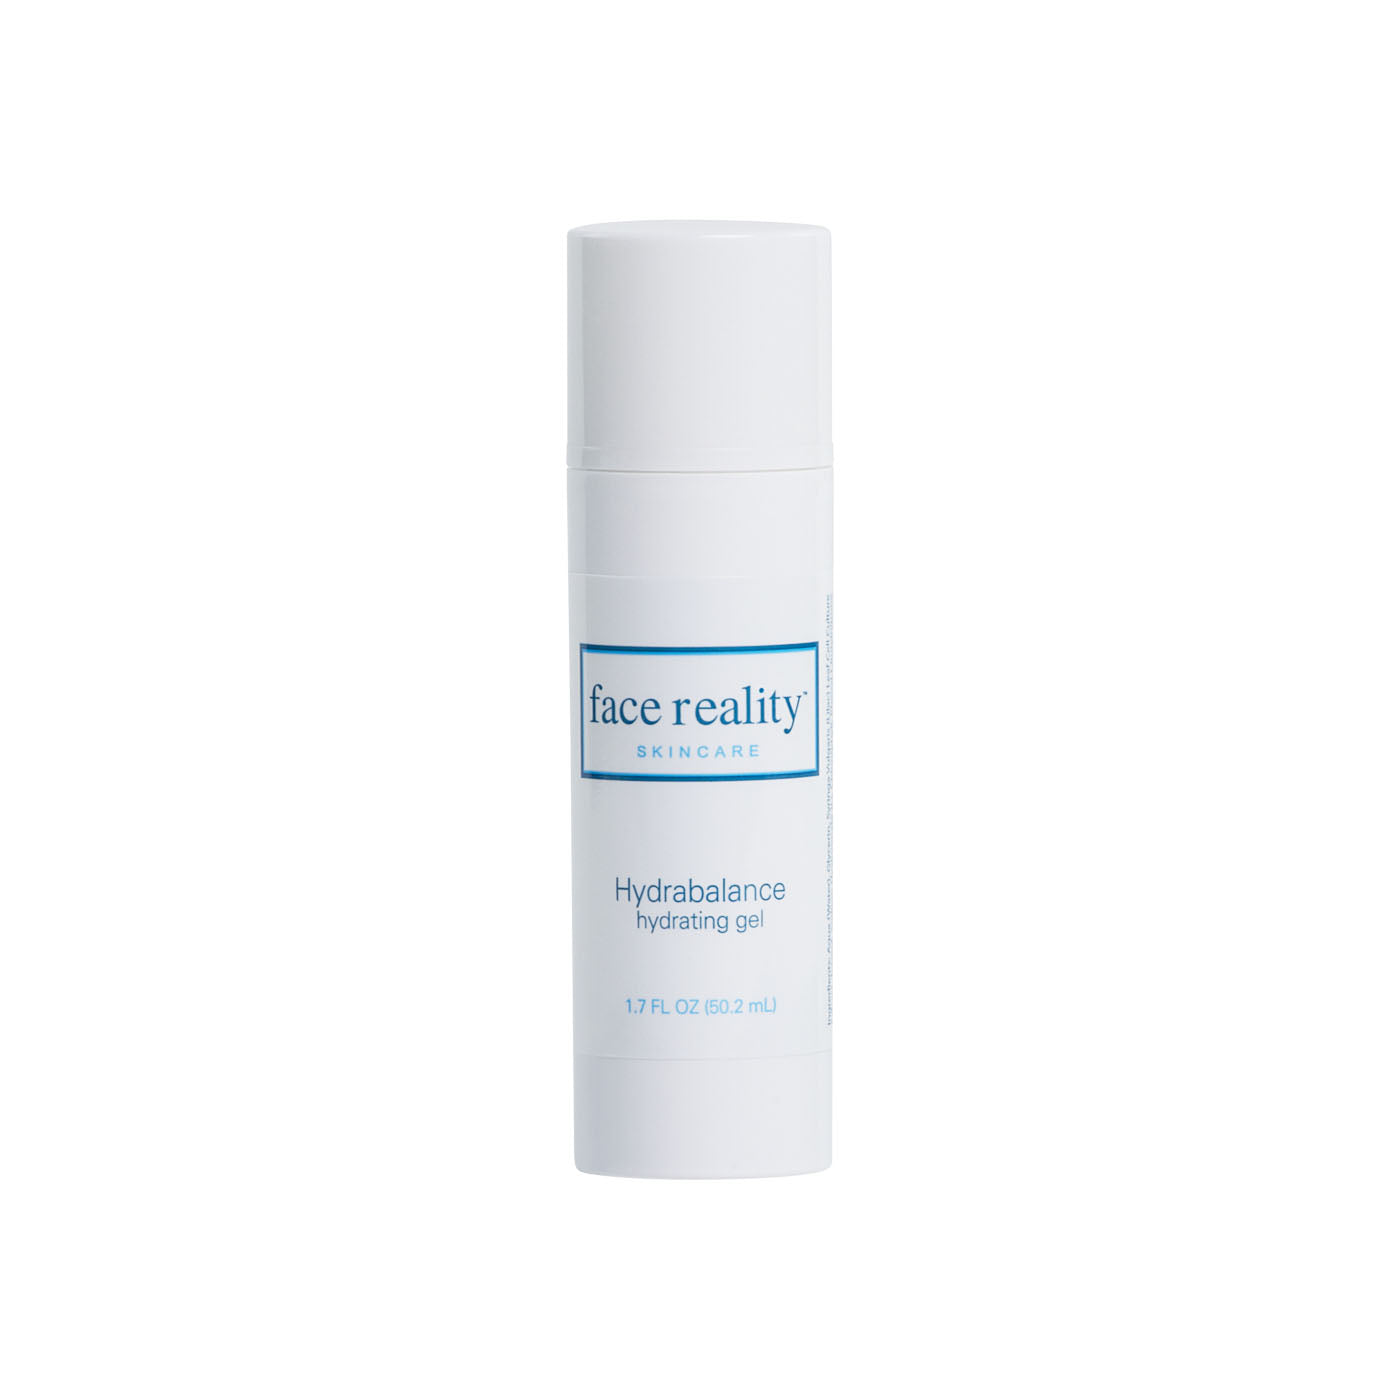 Face Reality™ Hydrabalance Water-Based Skin Hydrating Gel 